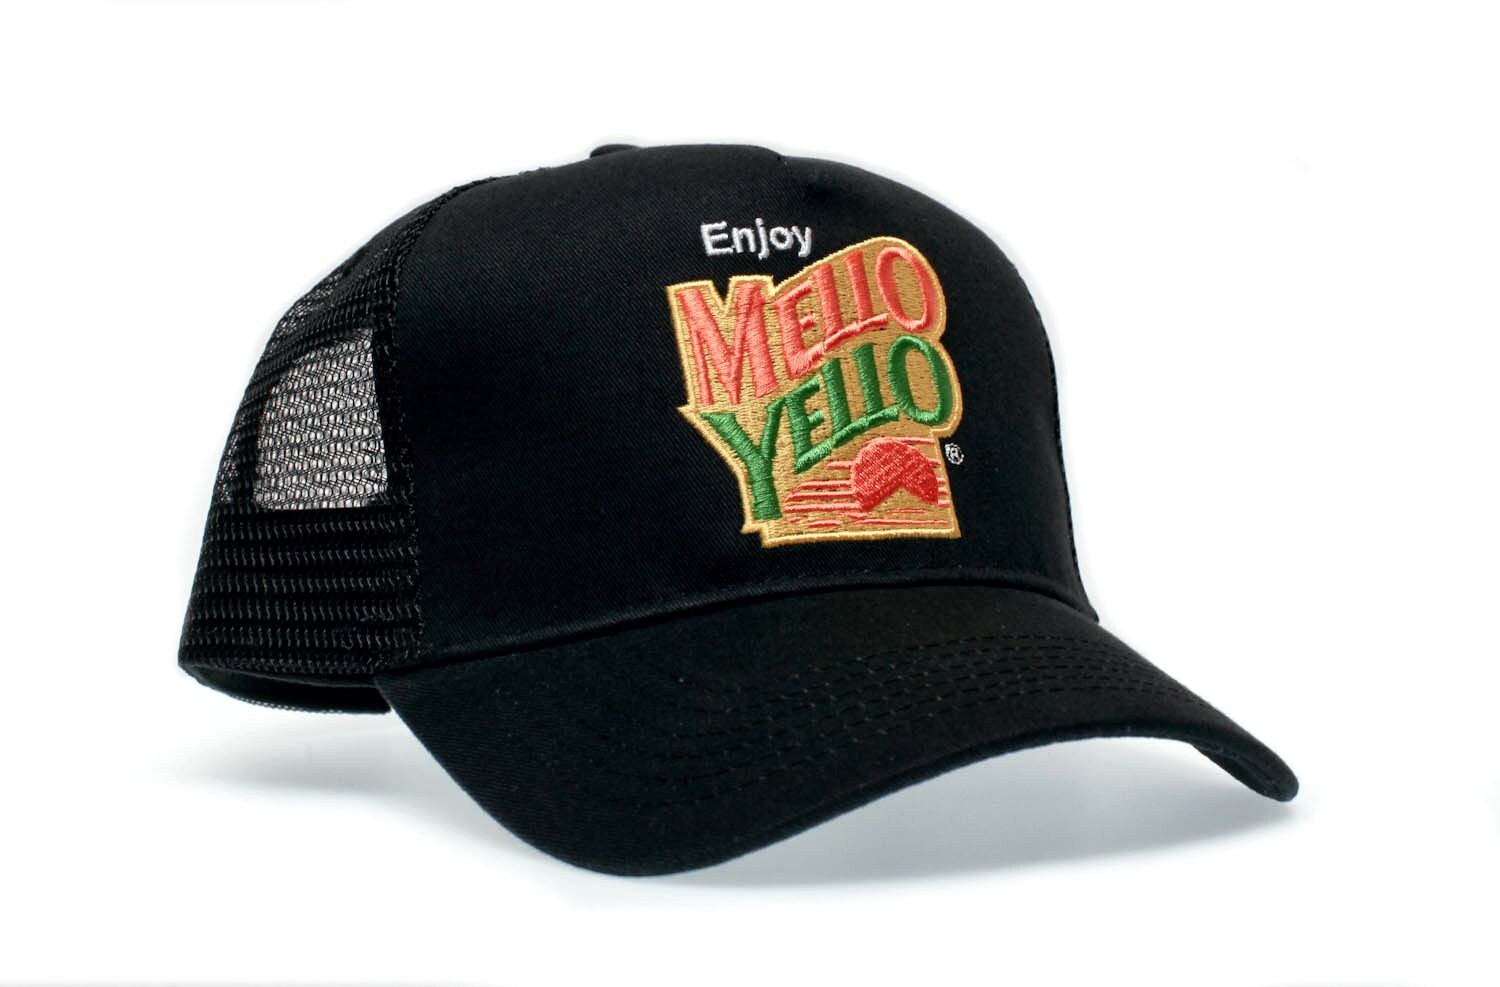 Mello Yello Hat - Cole Harry Hogge Trucker Hat Unisex Adult Cap Black